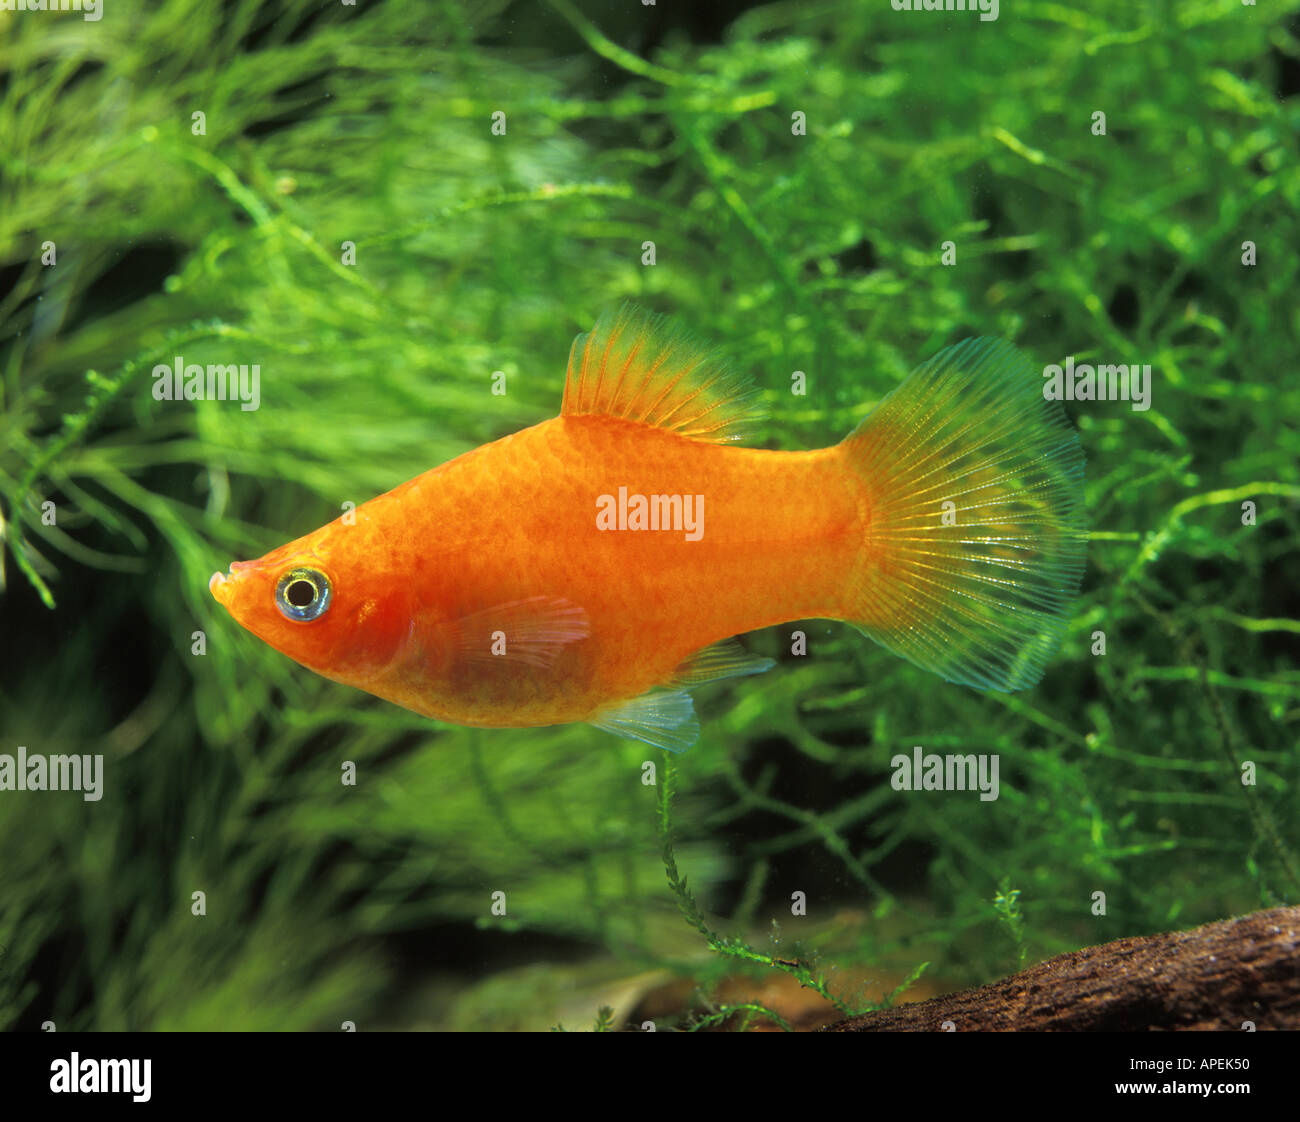 Fish Xiphophorus Maculatus Labat Rouquette VWPics com Stock Photo